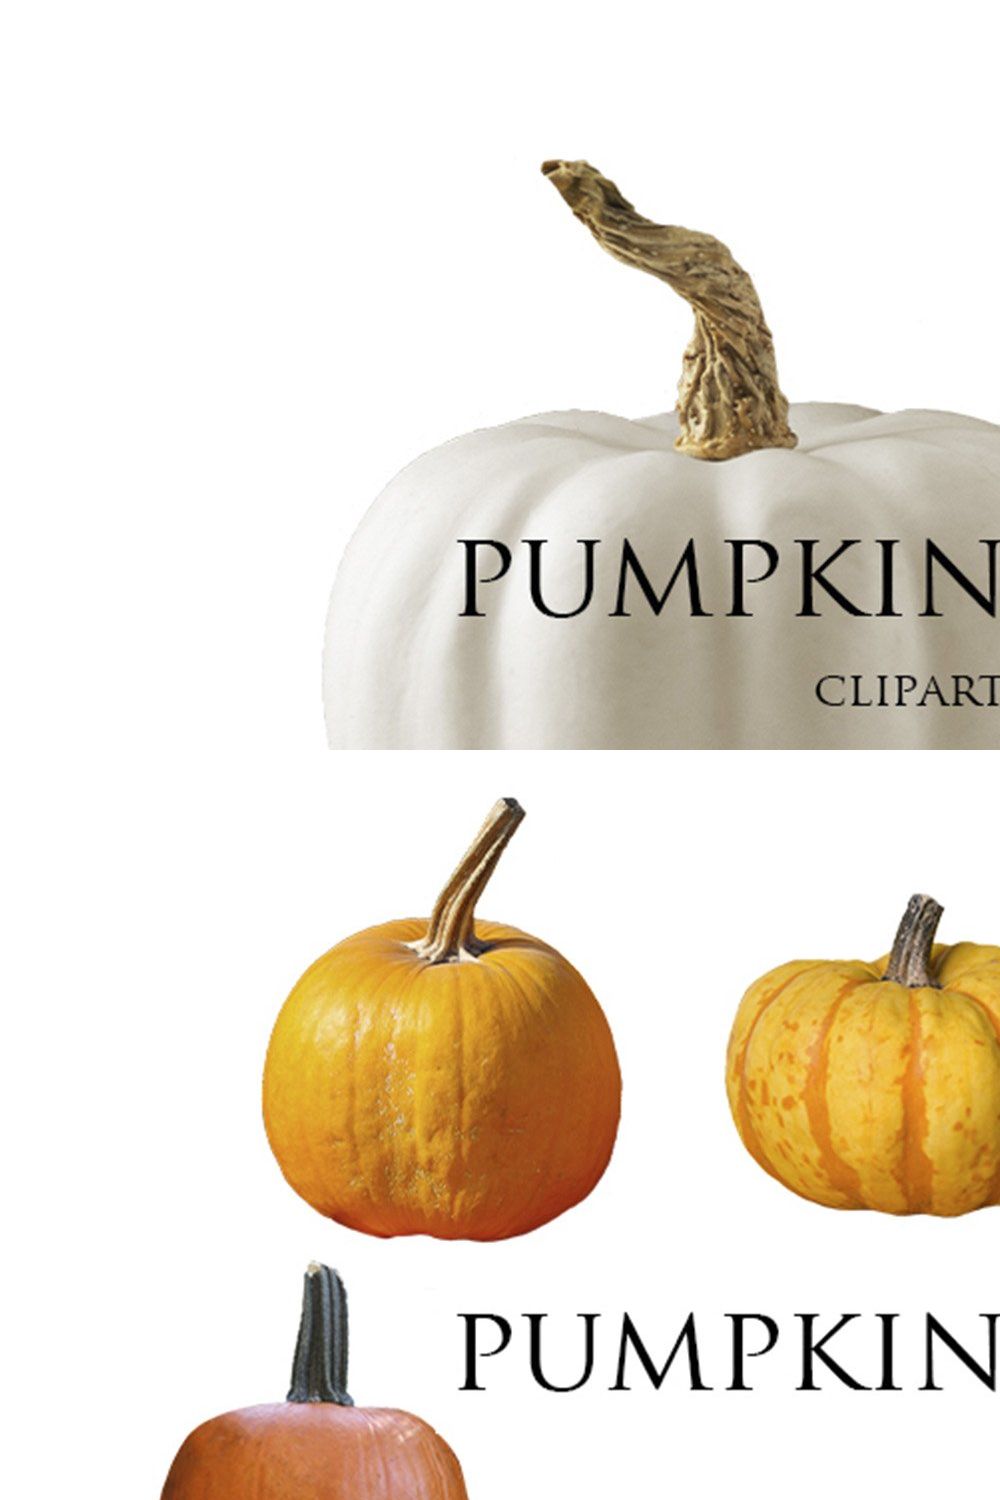 Pumpkin PNGs Clip Art pinterest preview image.